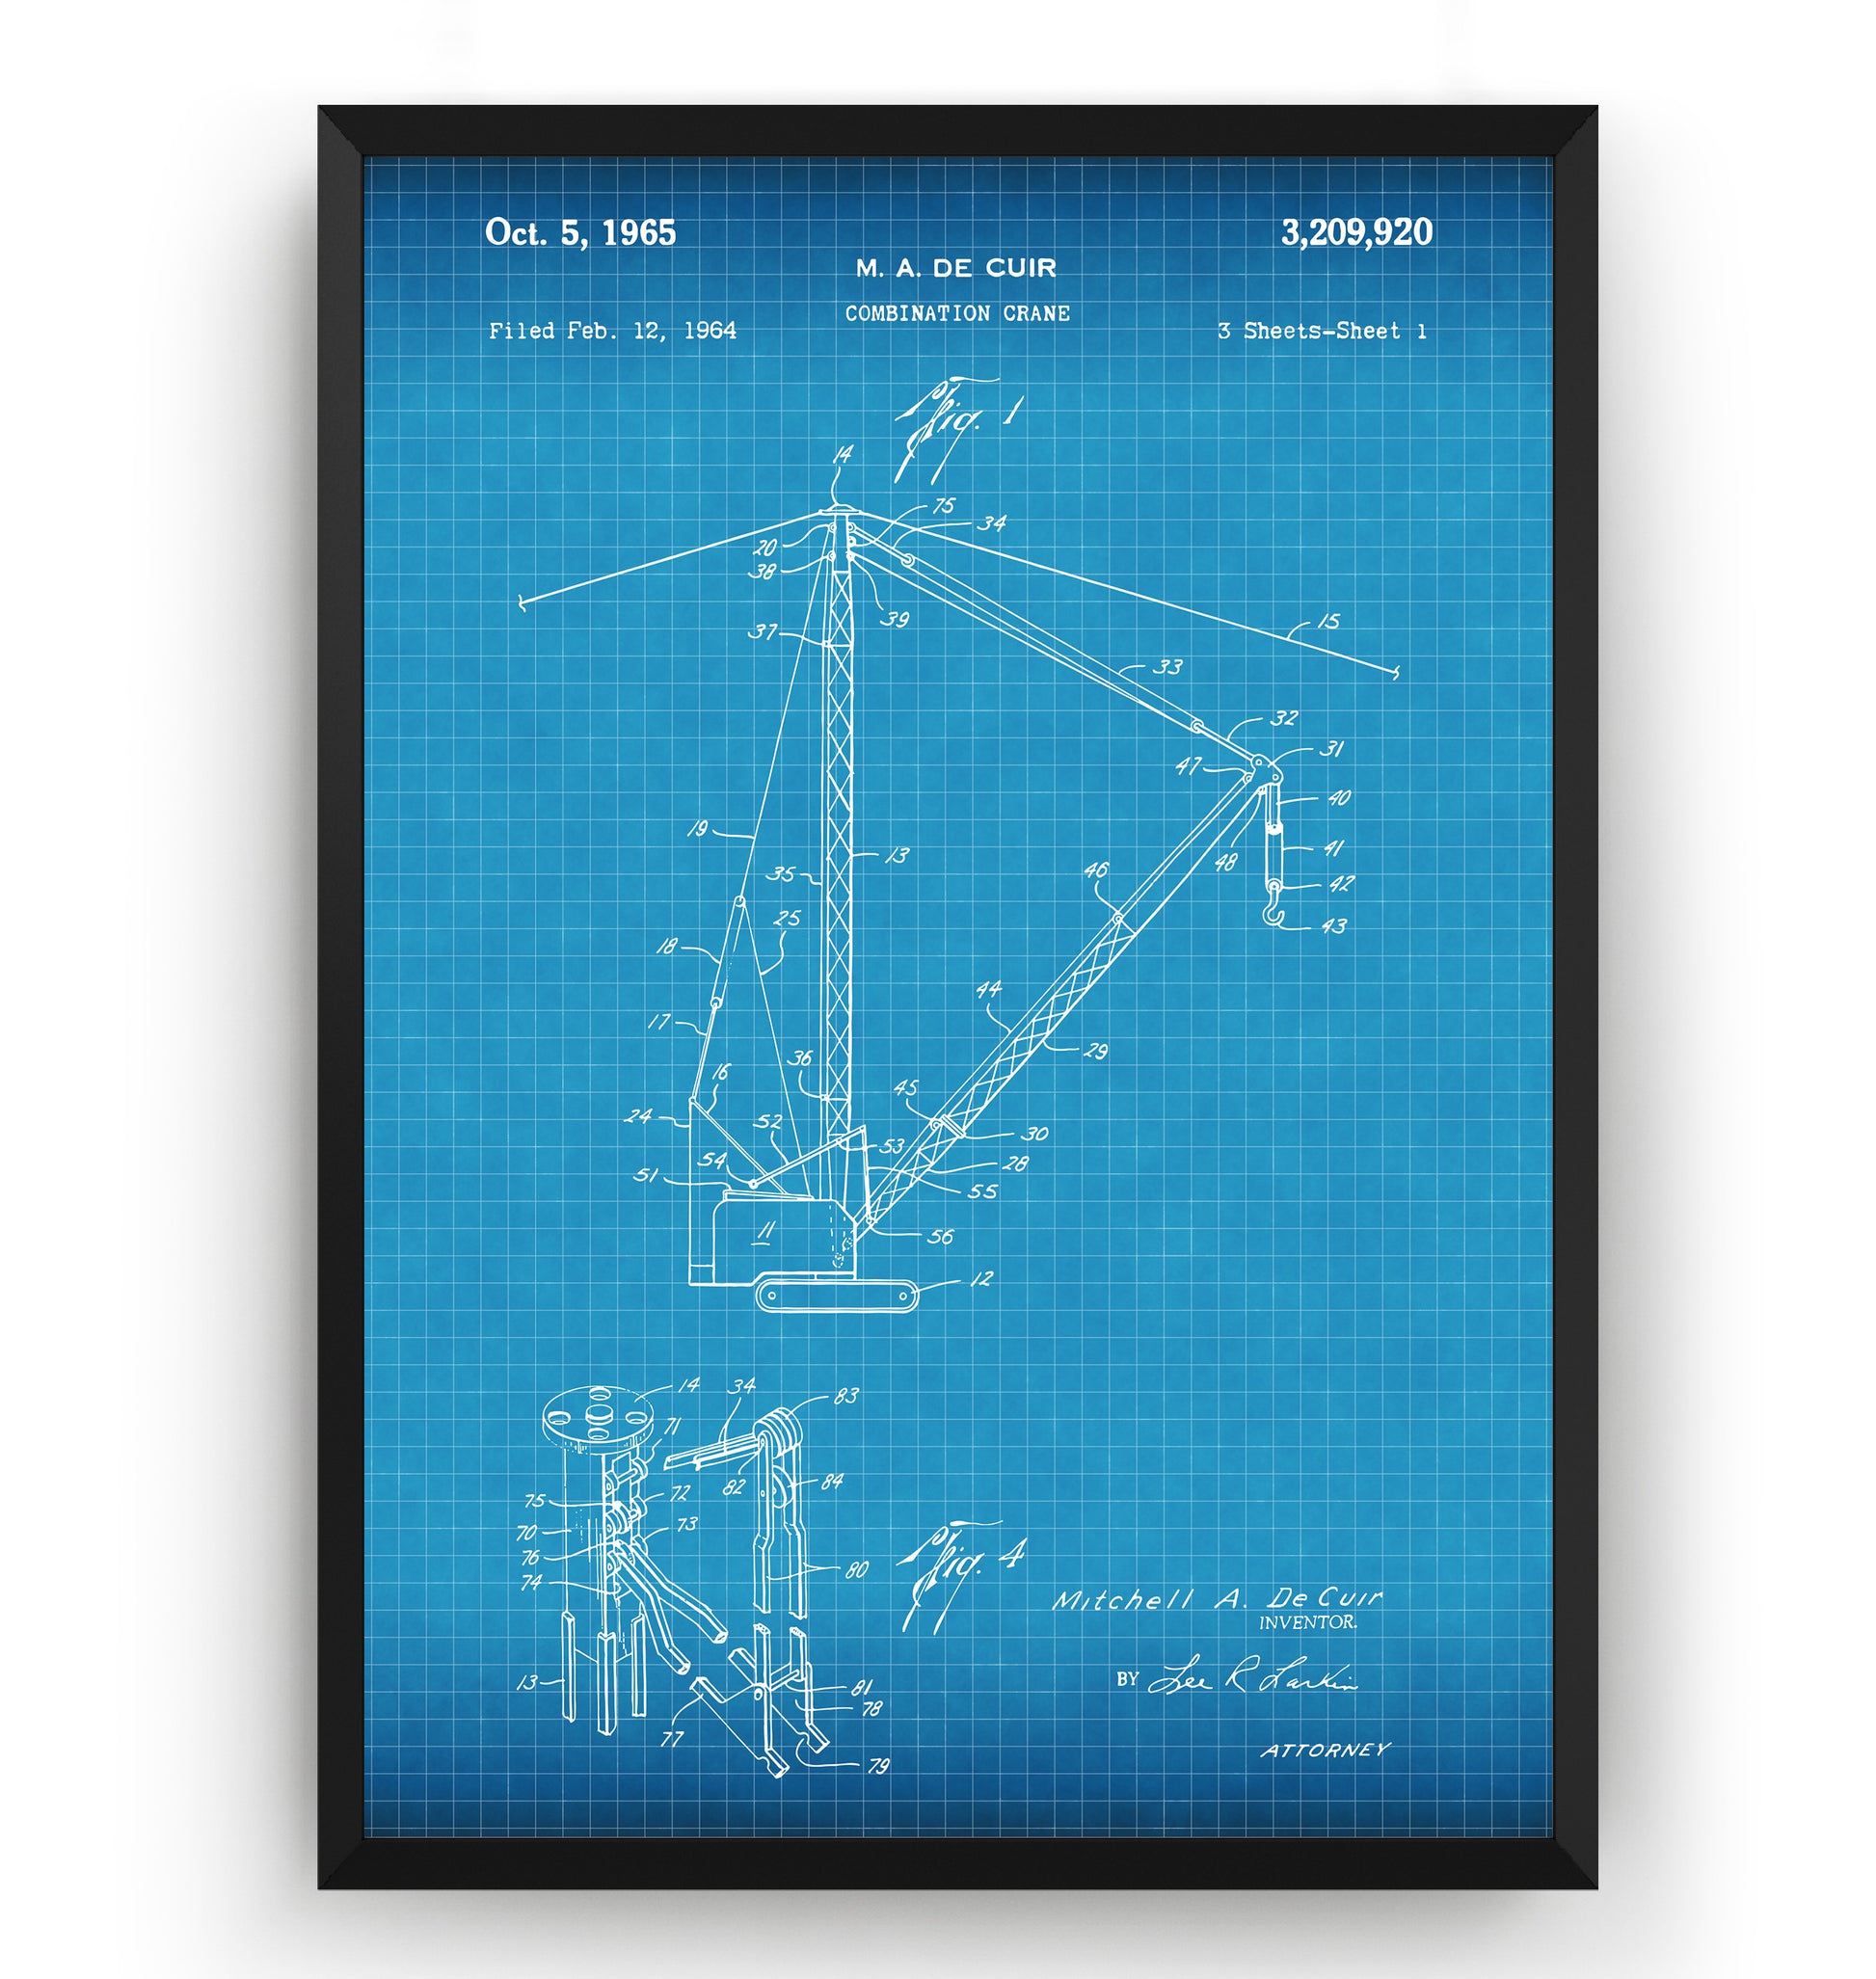 Combination Crane 1965 Patent Print - Magic Posters